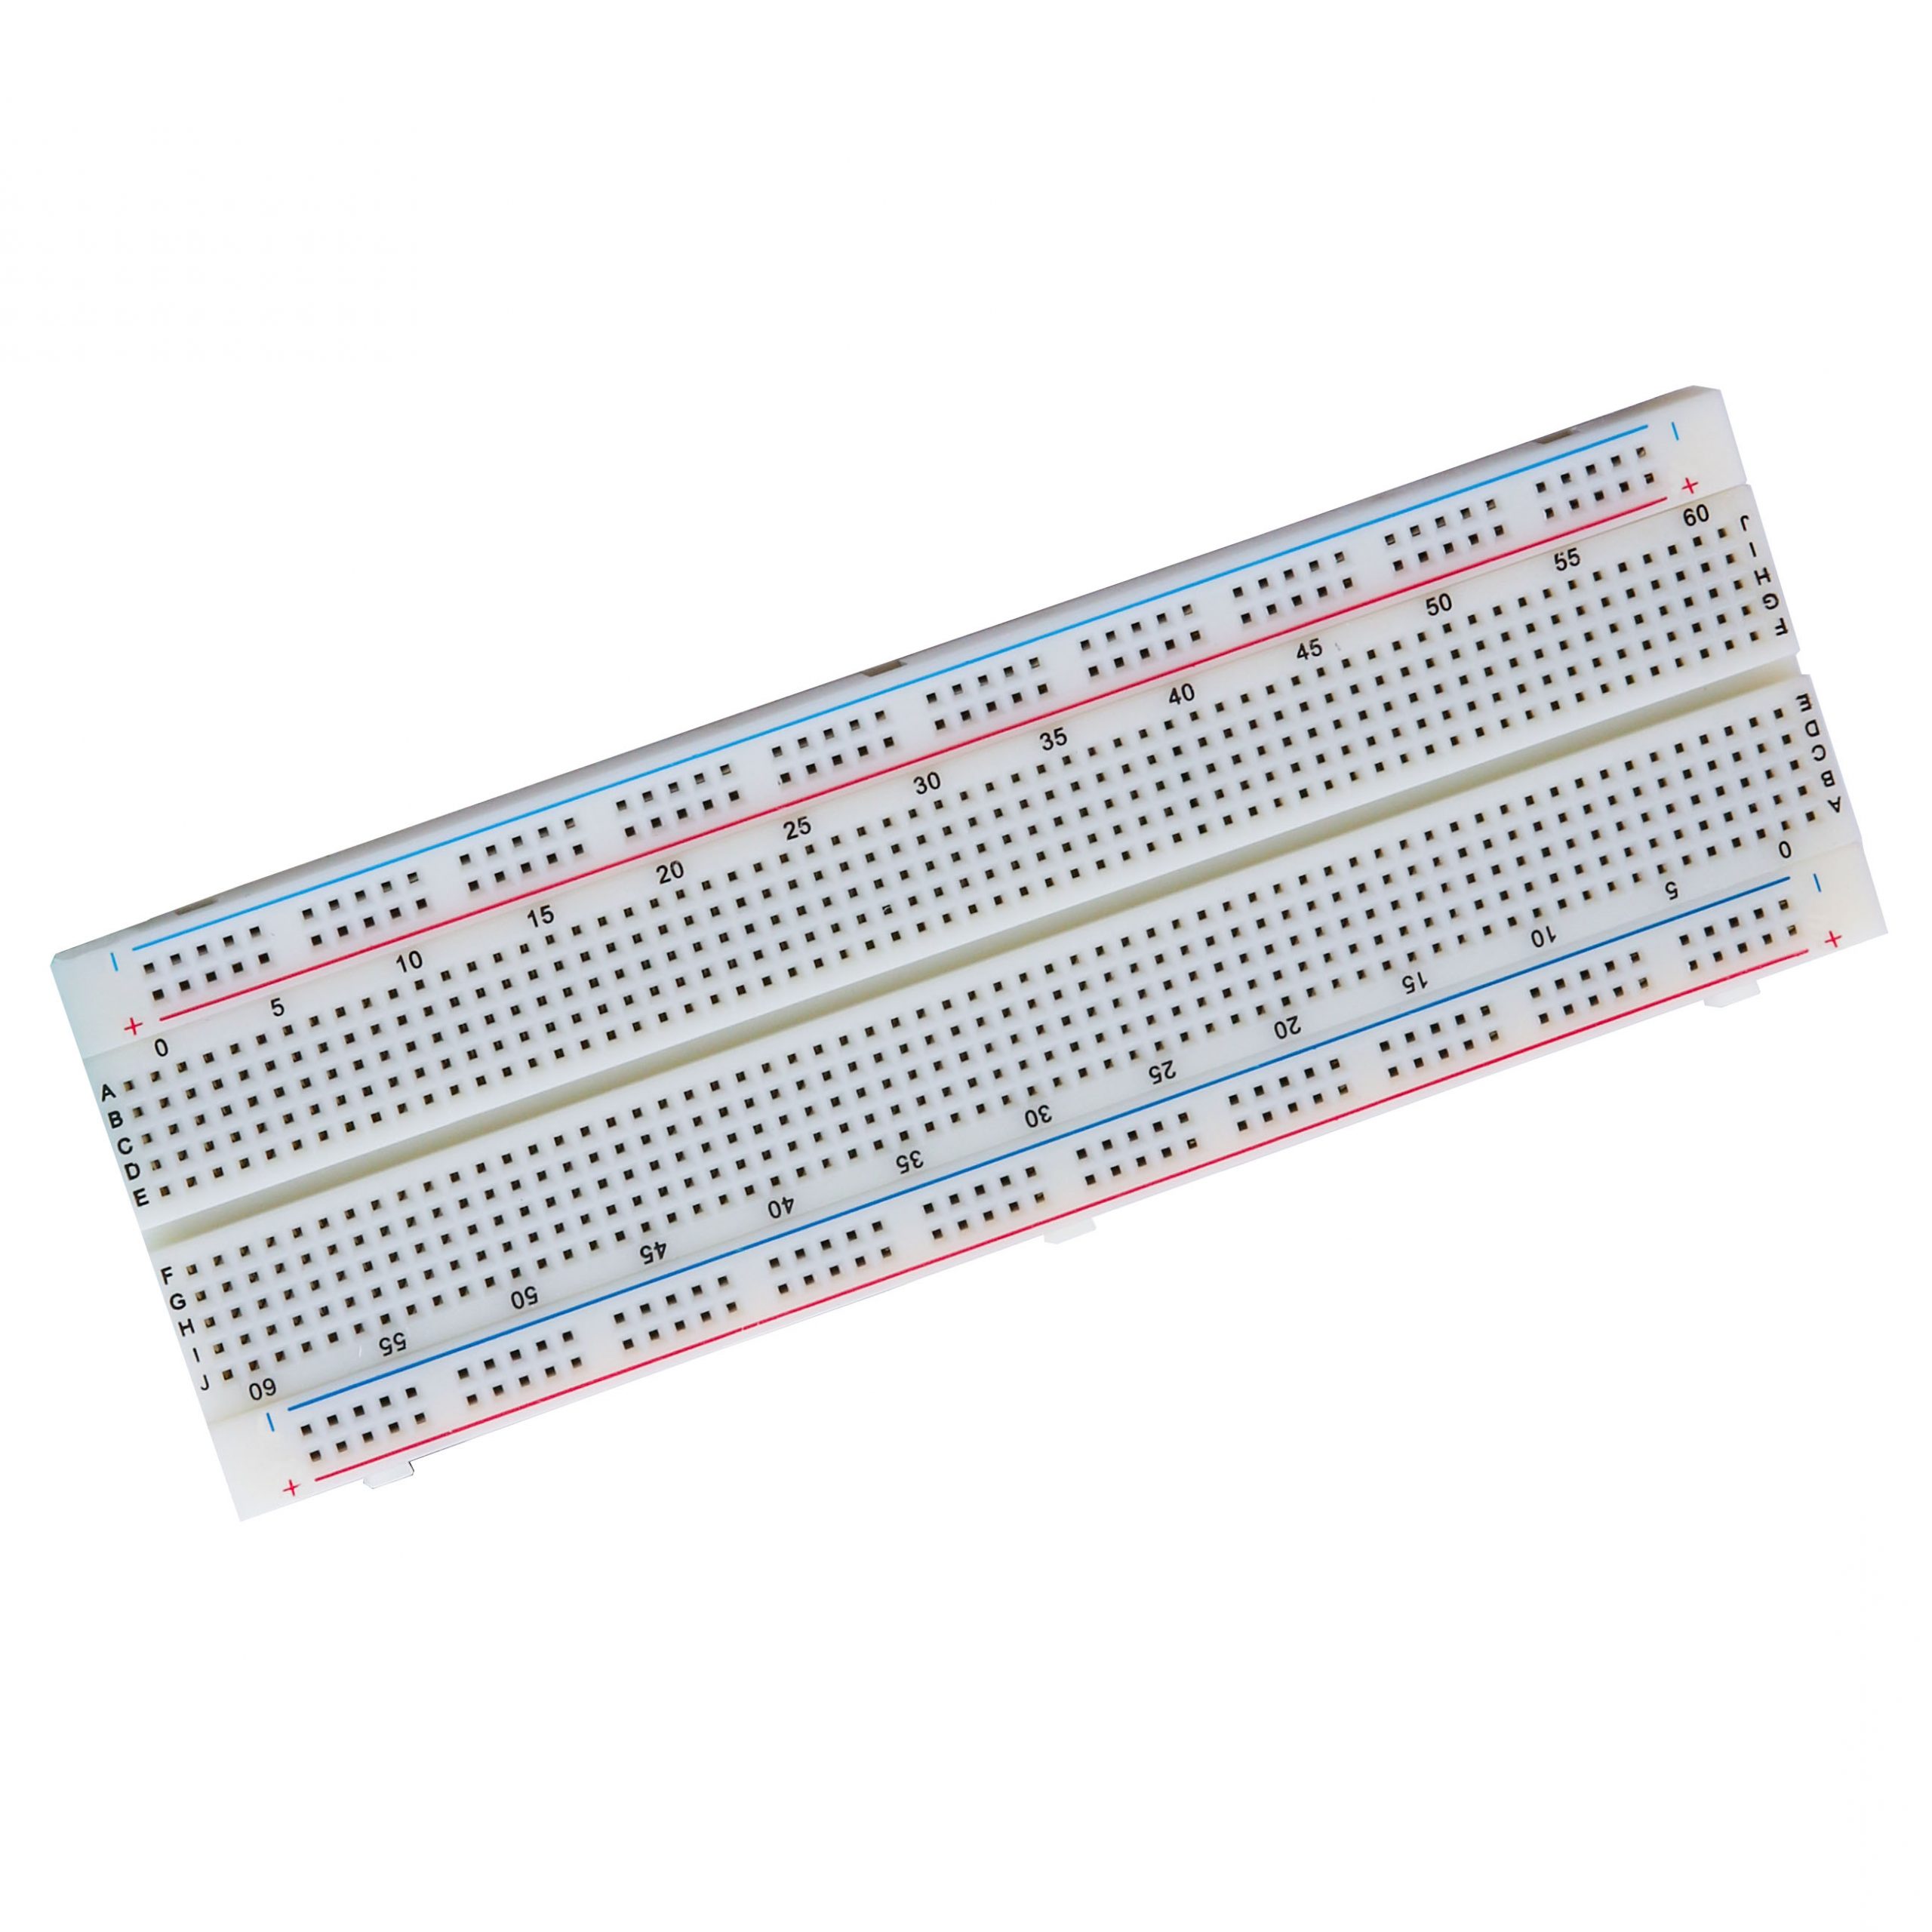 kesoto Mini Breadboard 840 Pin Solderless Prototype PCB Board Kit Electronic-Prototype-System 